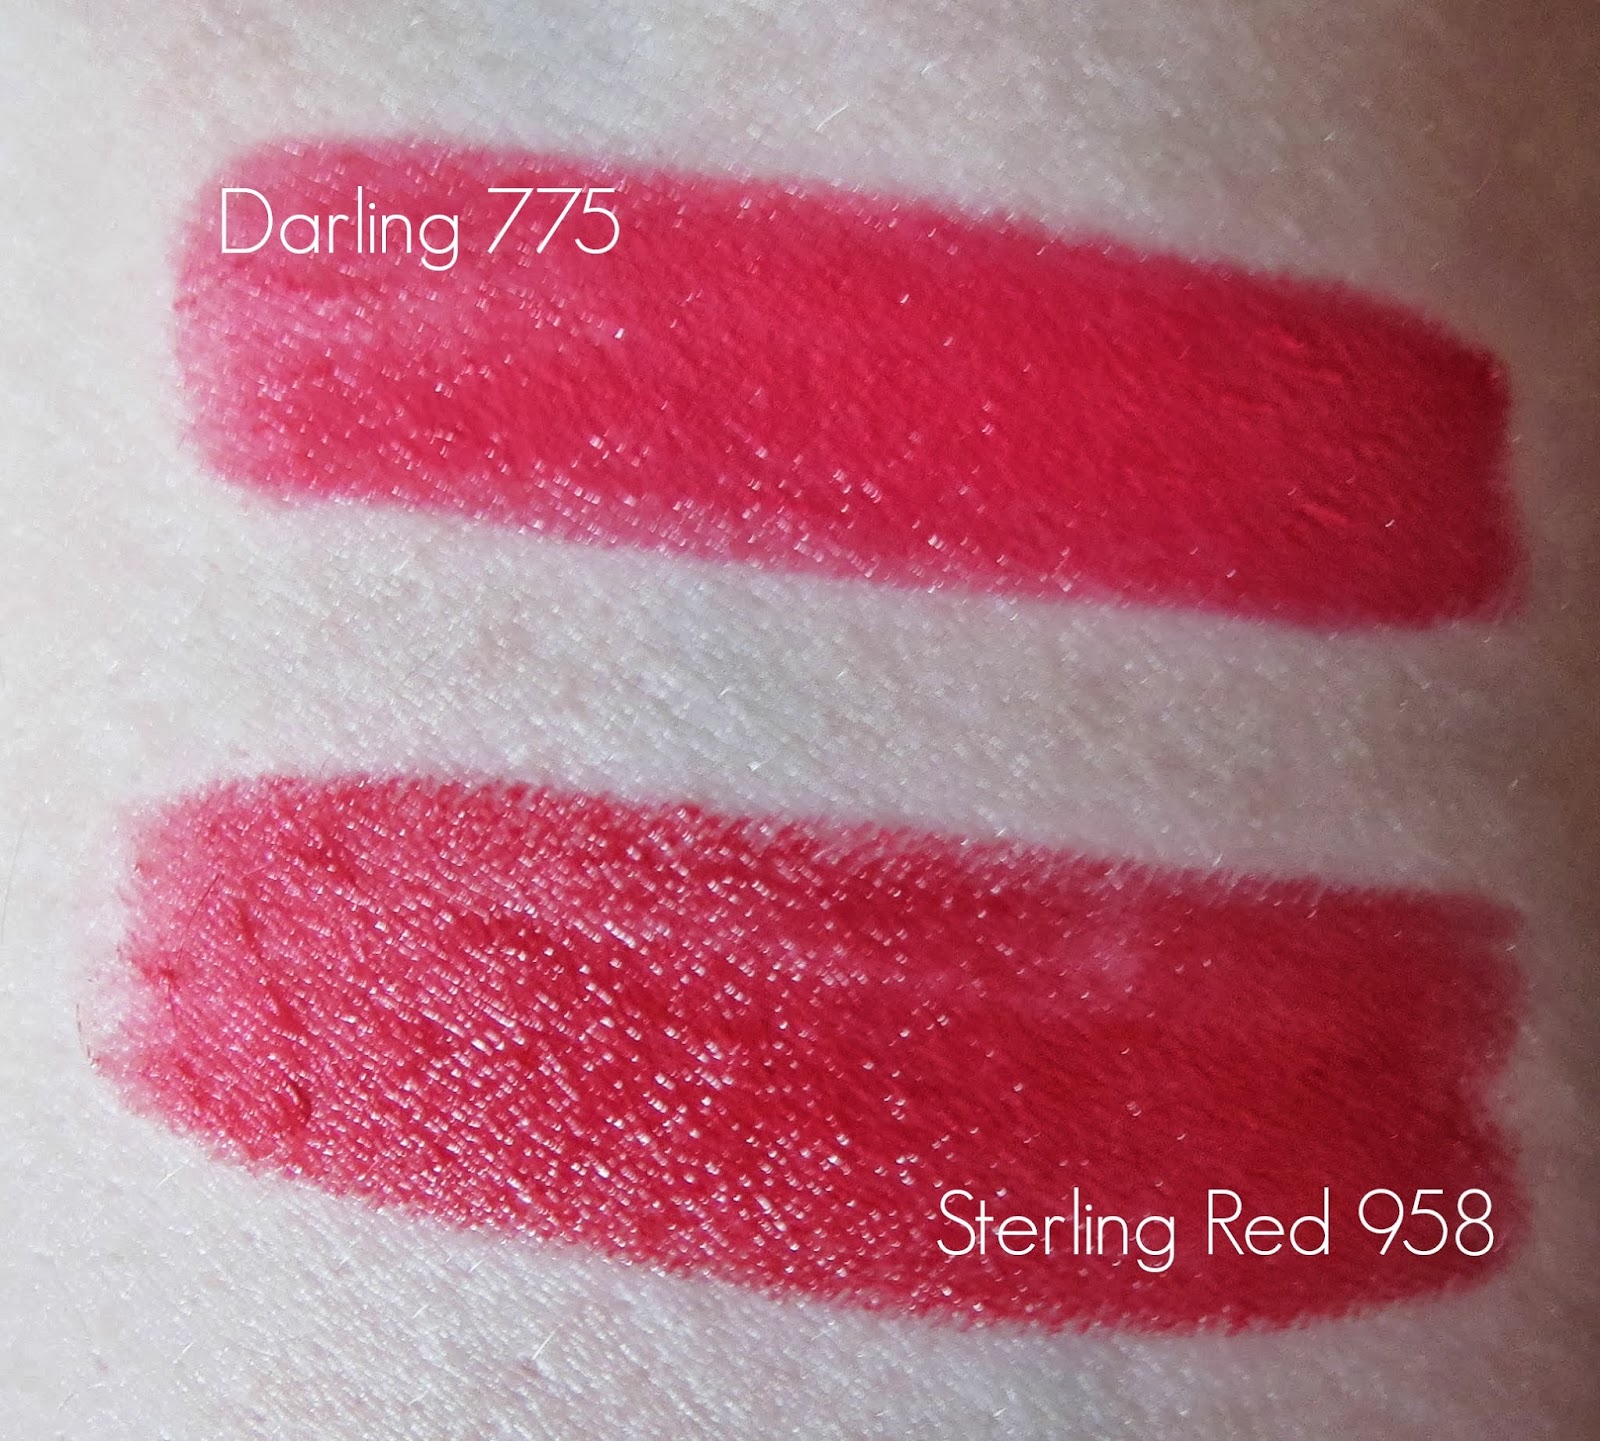 rouge dior 775 darling